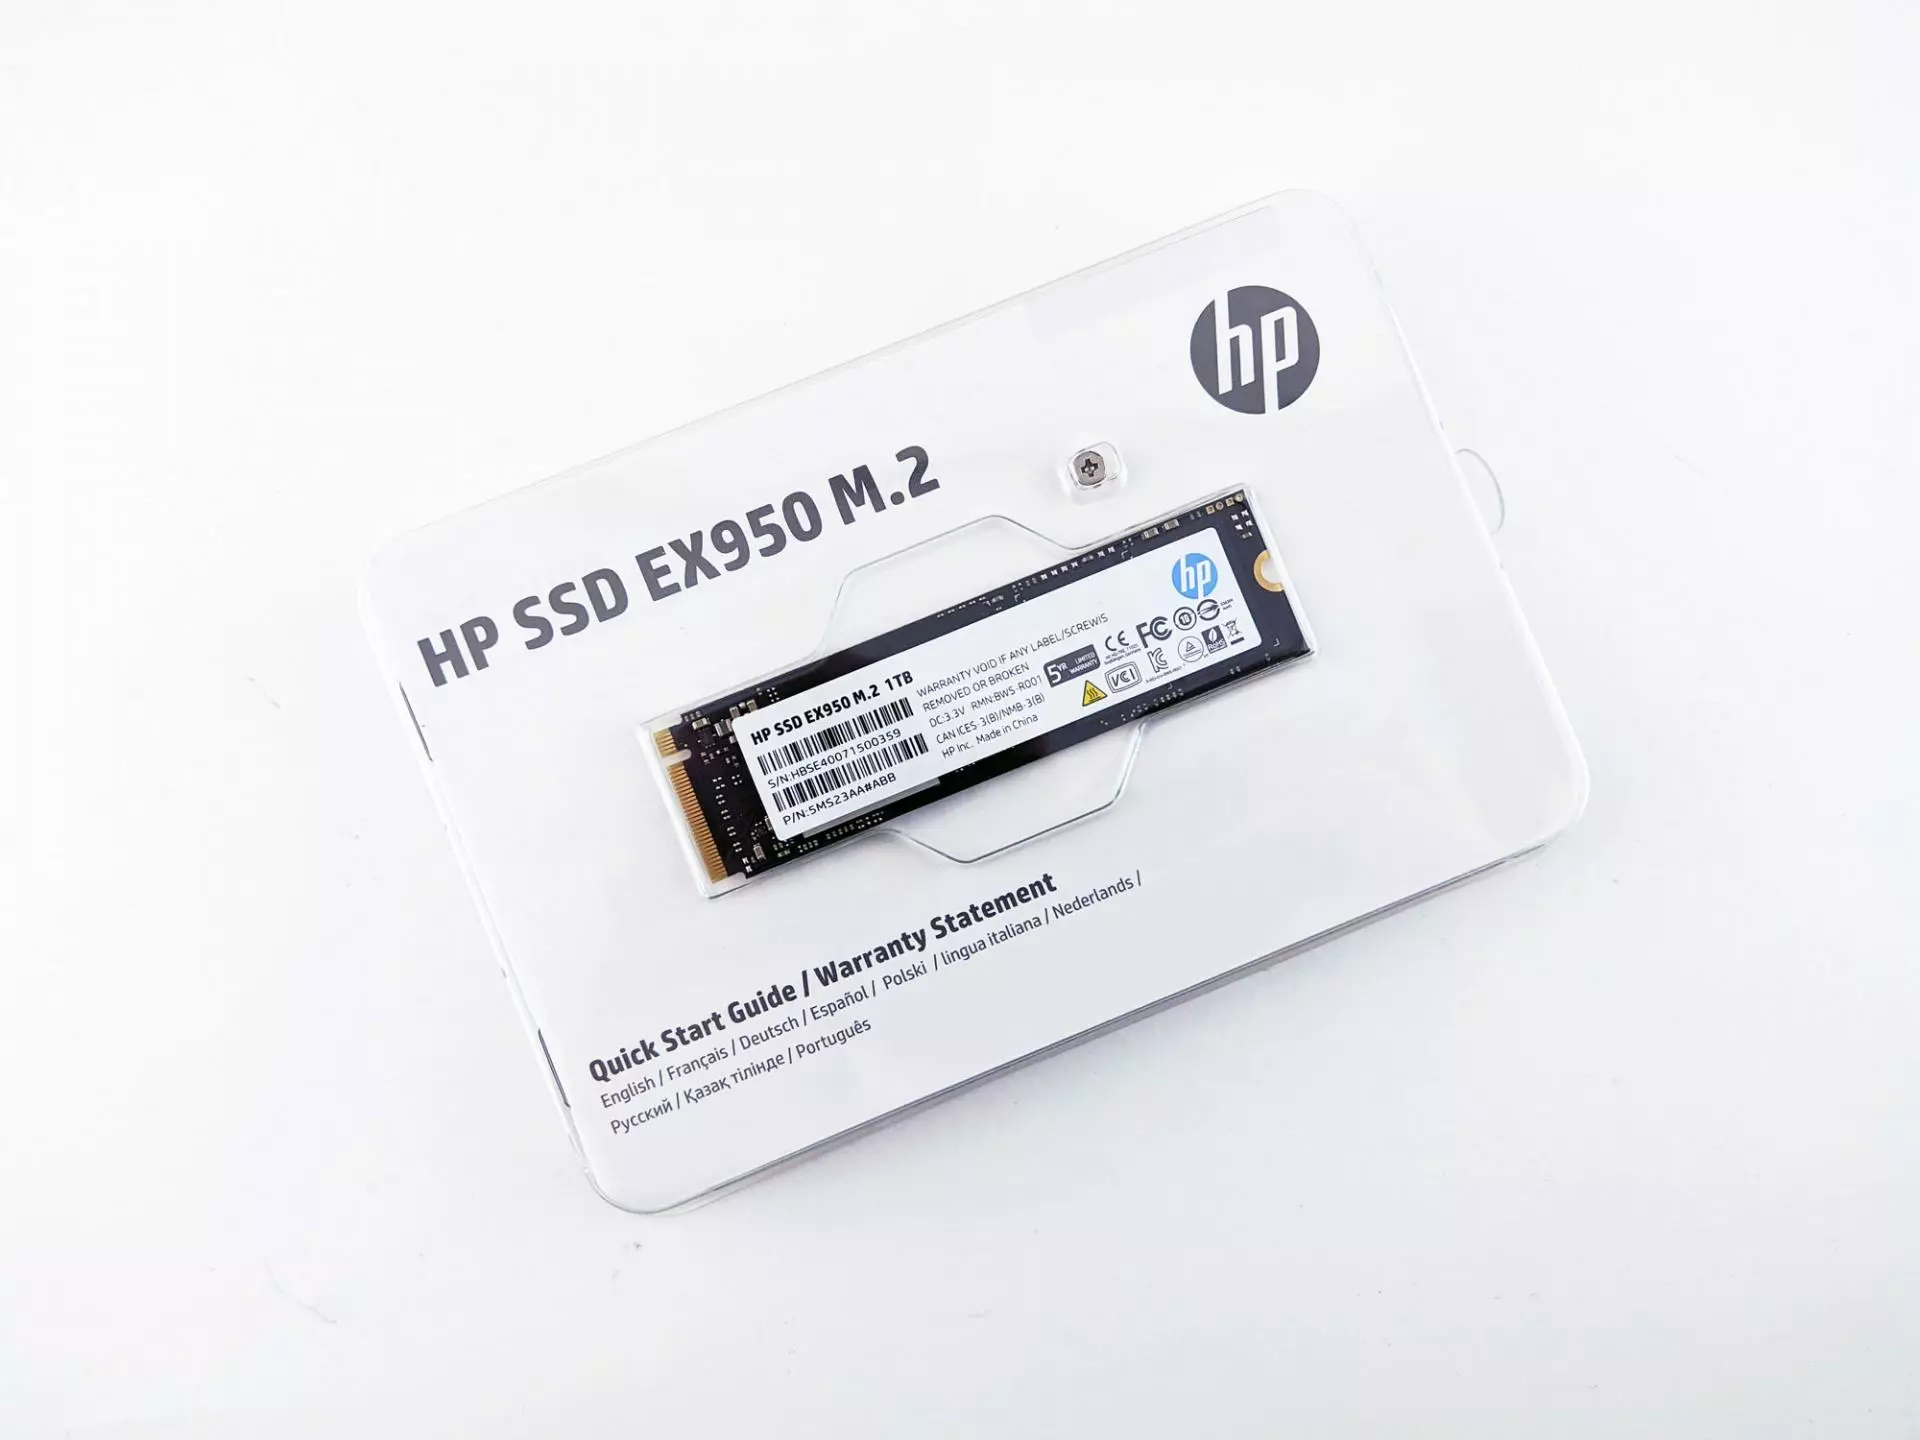 Sulayi ang SSD HP Ex950